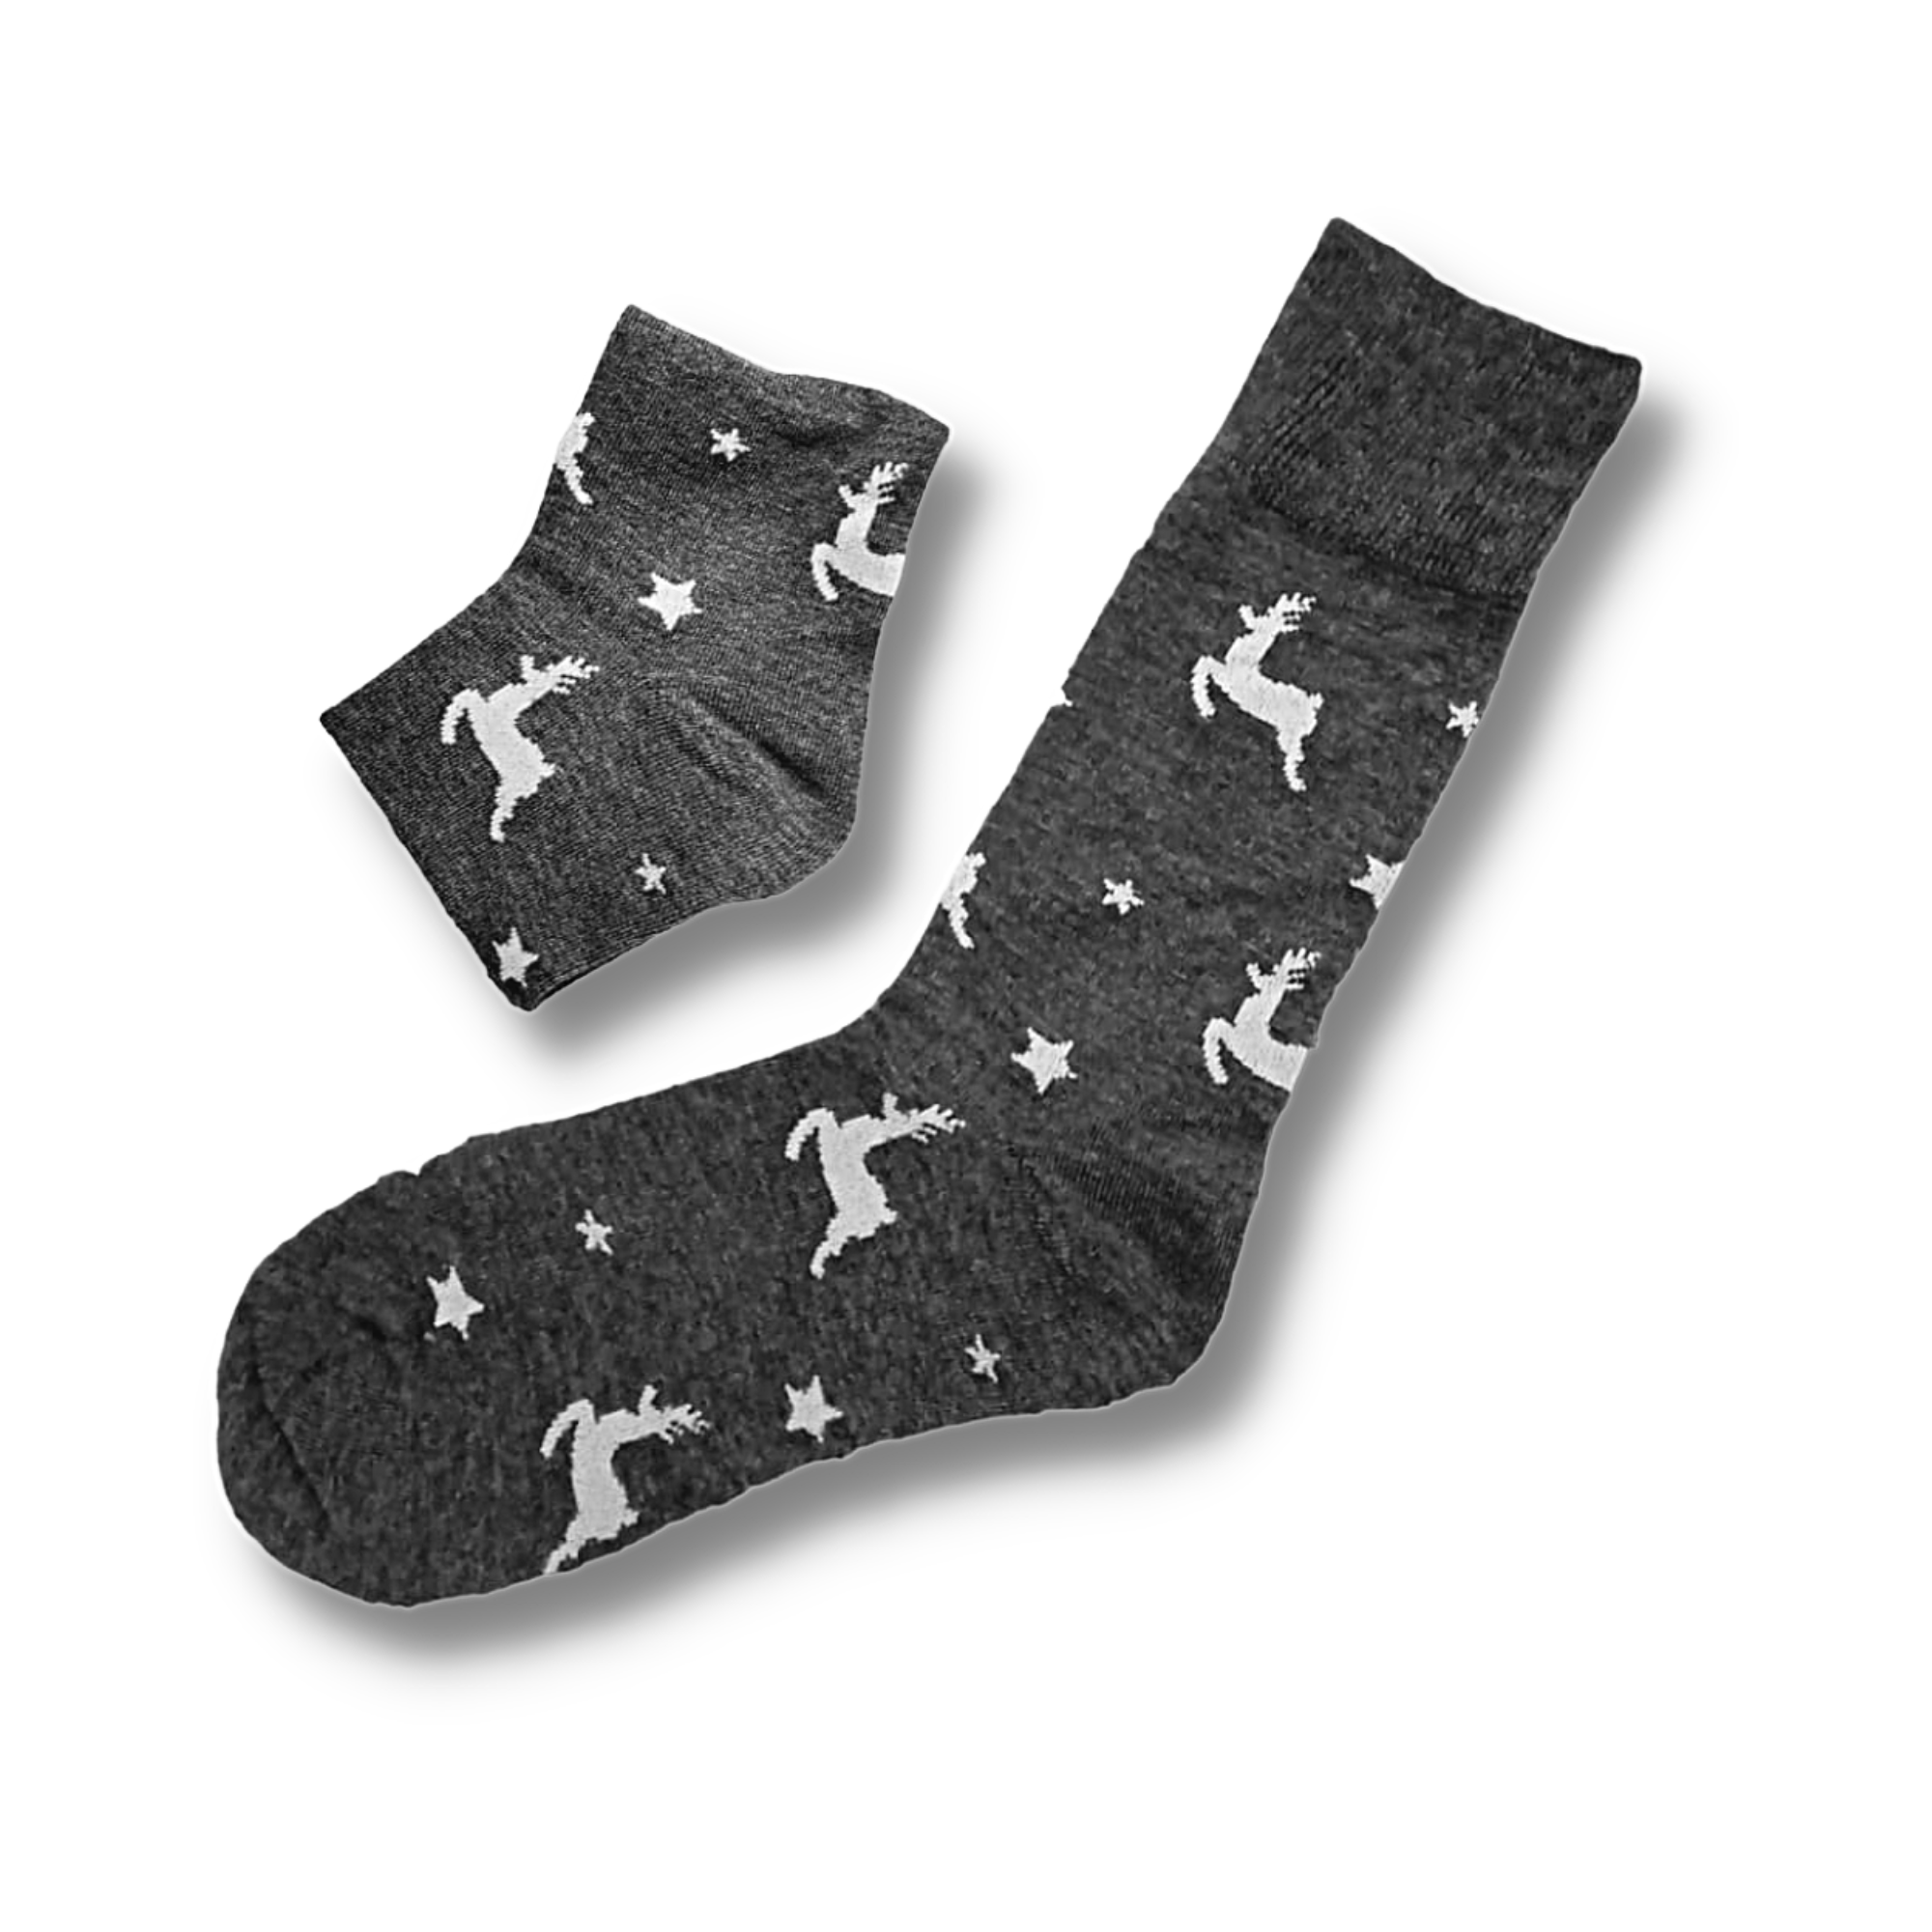 Leaping Reindeer Men's Socks